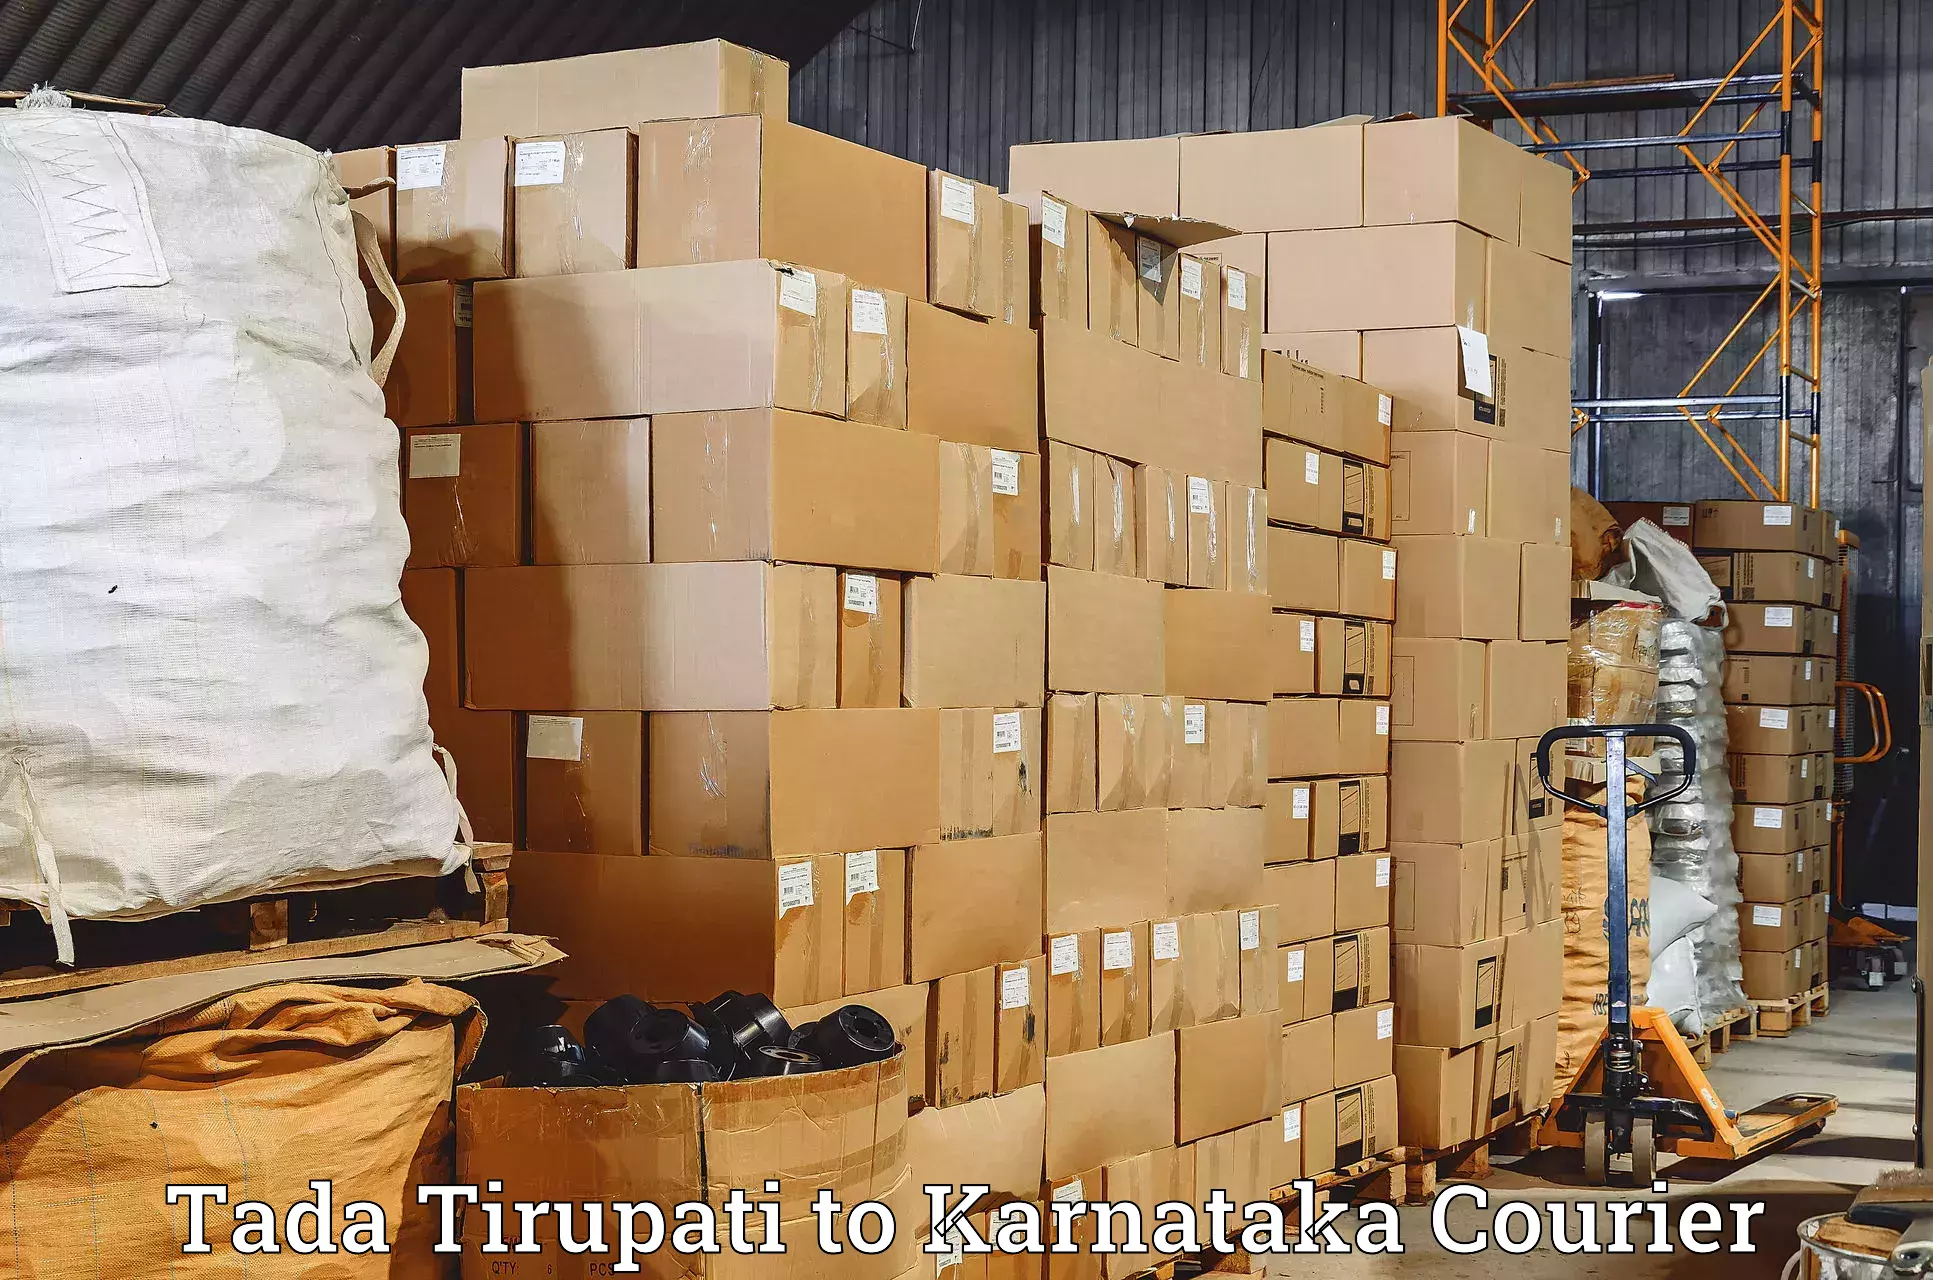 User-friendly courier app Tada Tirupati to Ballari